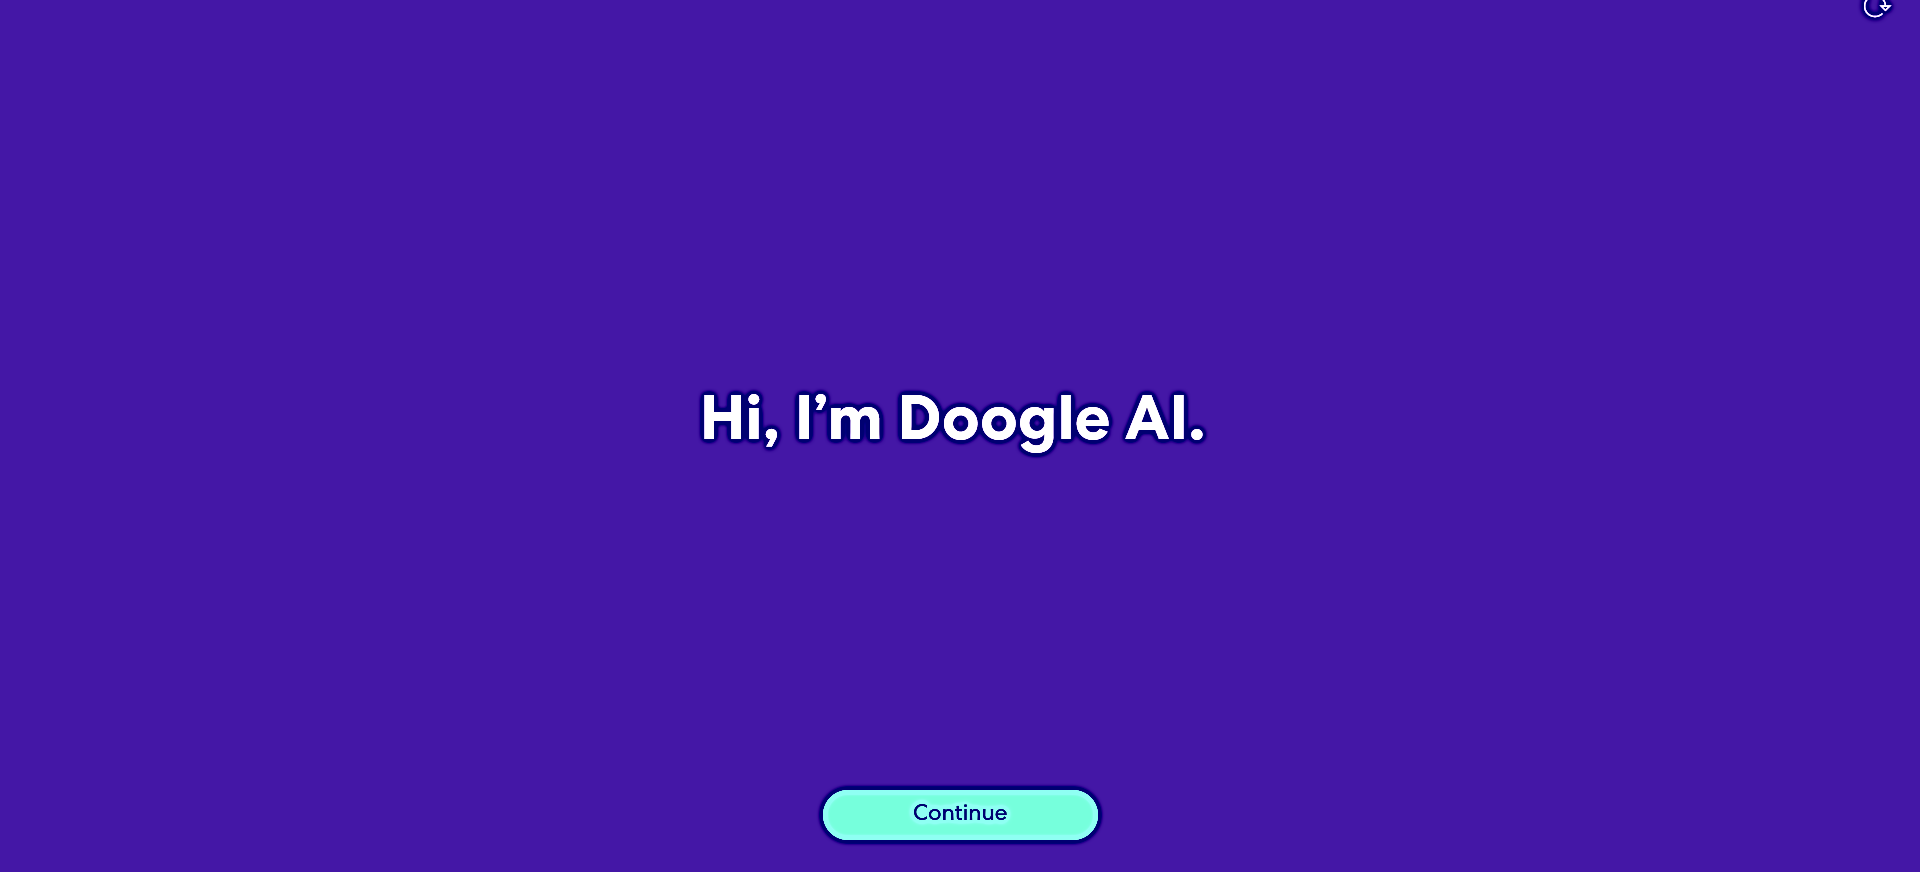 Doogle AI featured